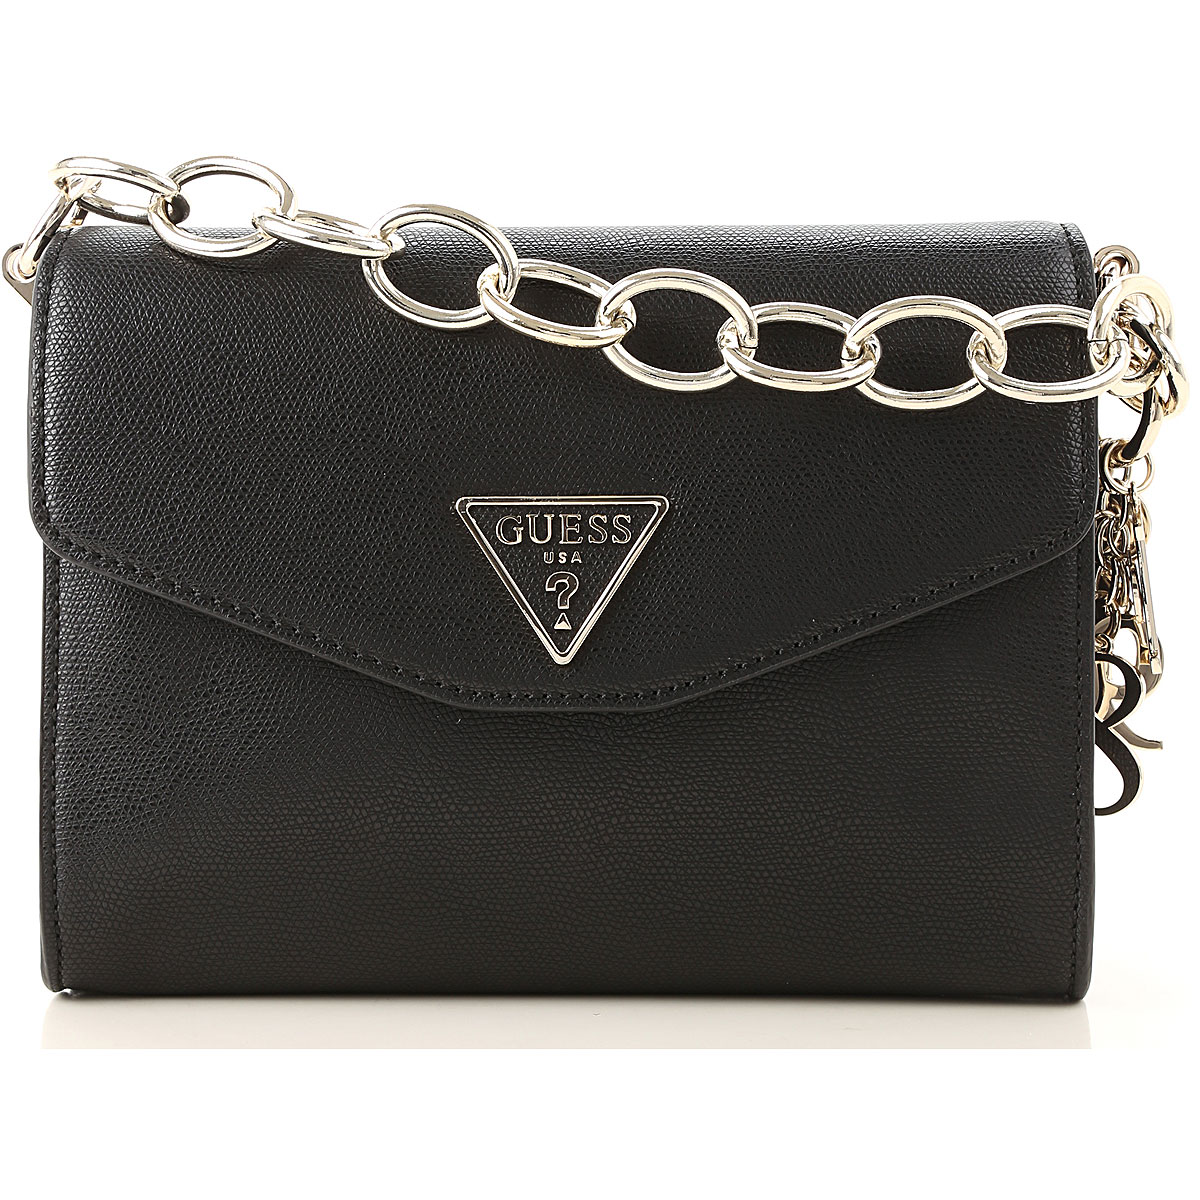 Handbags Guess, Style code: vg729121-black-